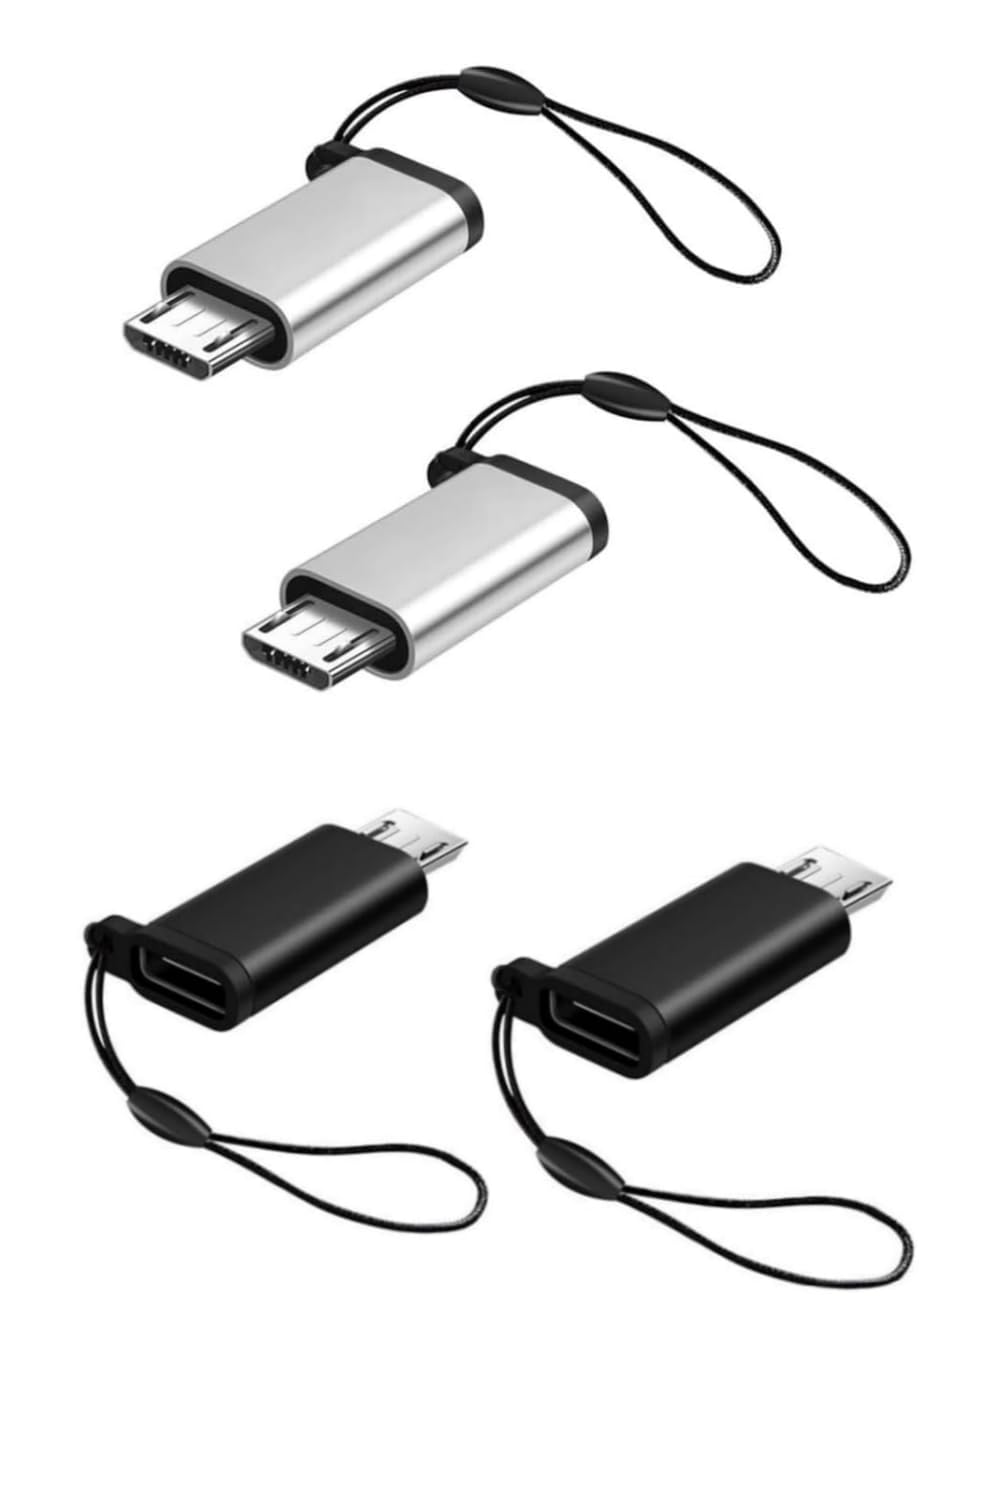 YFFSFDC マイクロUSB変換アダプター タイプC Micro USB 変換アダプタ 4個入り Type C メス to Micro USB オス 変換コネクタ 充電とデータ転送 Galaxy、Nexus、Xperia、HUAWEI等Micro USB設備対応 ストラップ付 紛失防止 （ブラック 、シルバー）